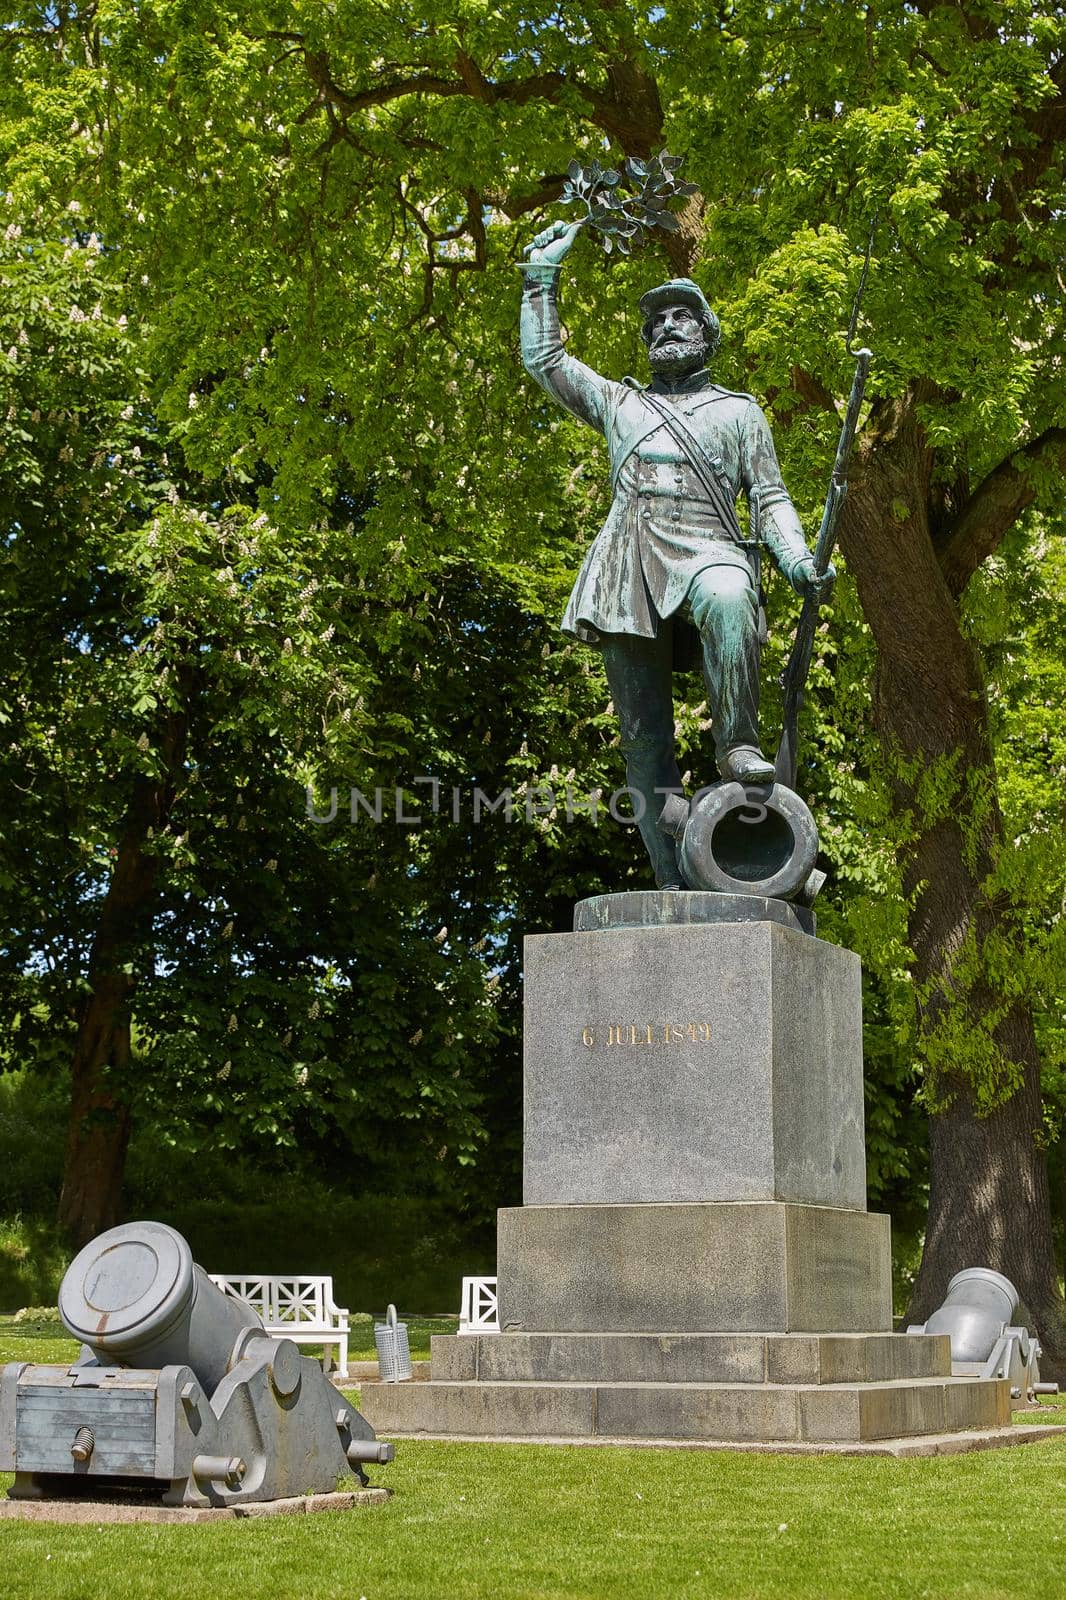 The statue Landsoldaten The Foot Soldier in Fredericia Denmark.